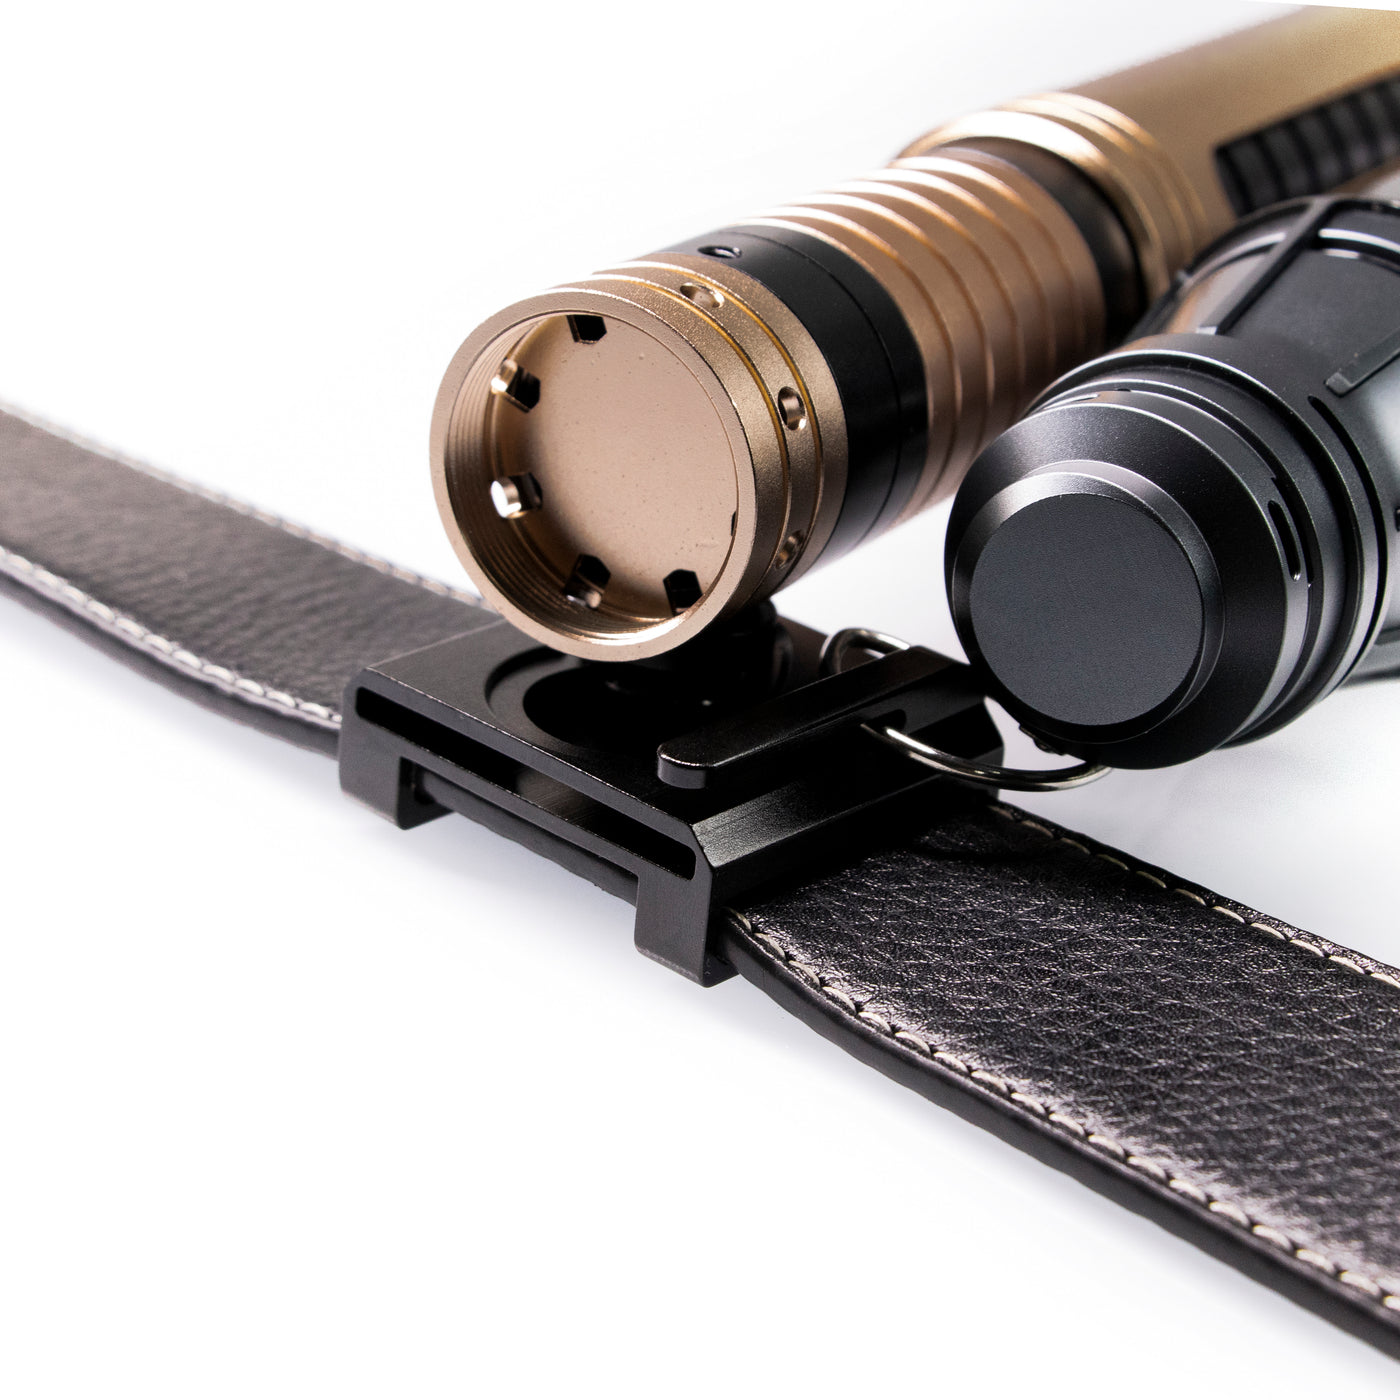 Riem clip connector - KenJo Sabers - Star Wars Lightsaber replica Jedi Sith - Best sabershop Europe - Nederland light sabers kopen -